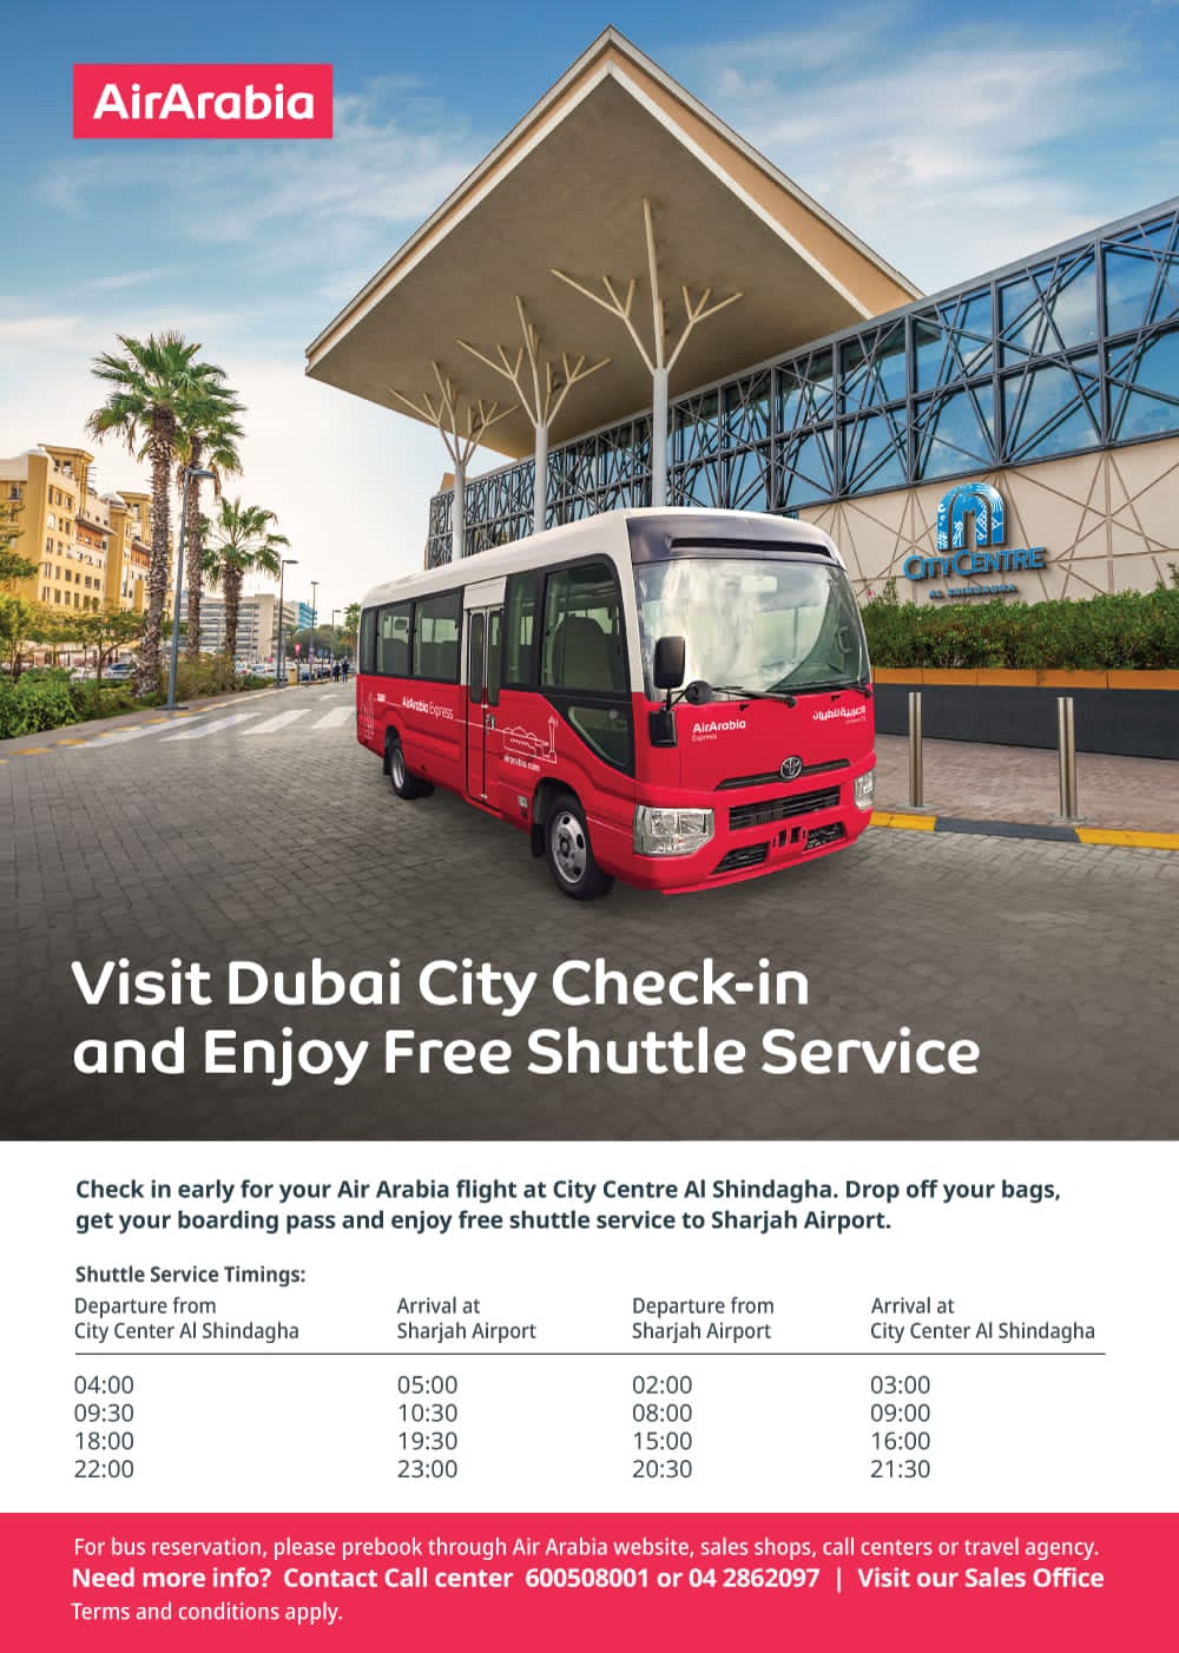 visit dubai city - free shuttle service advertisement